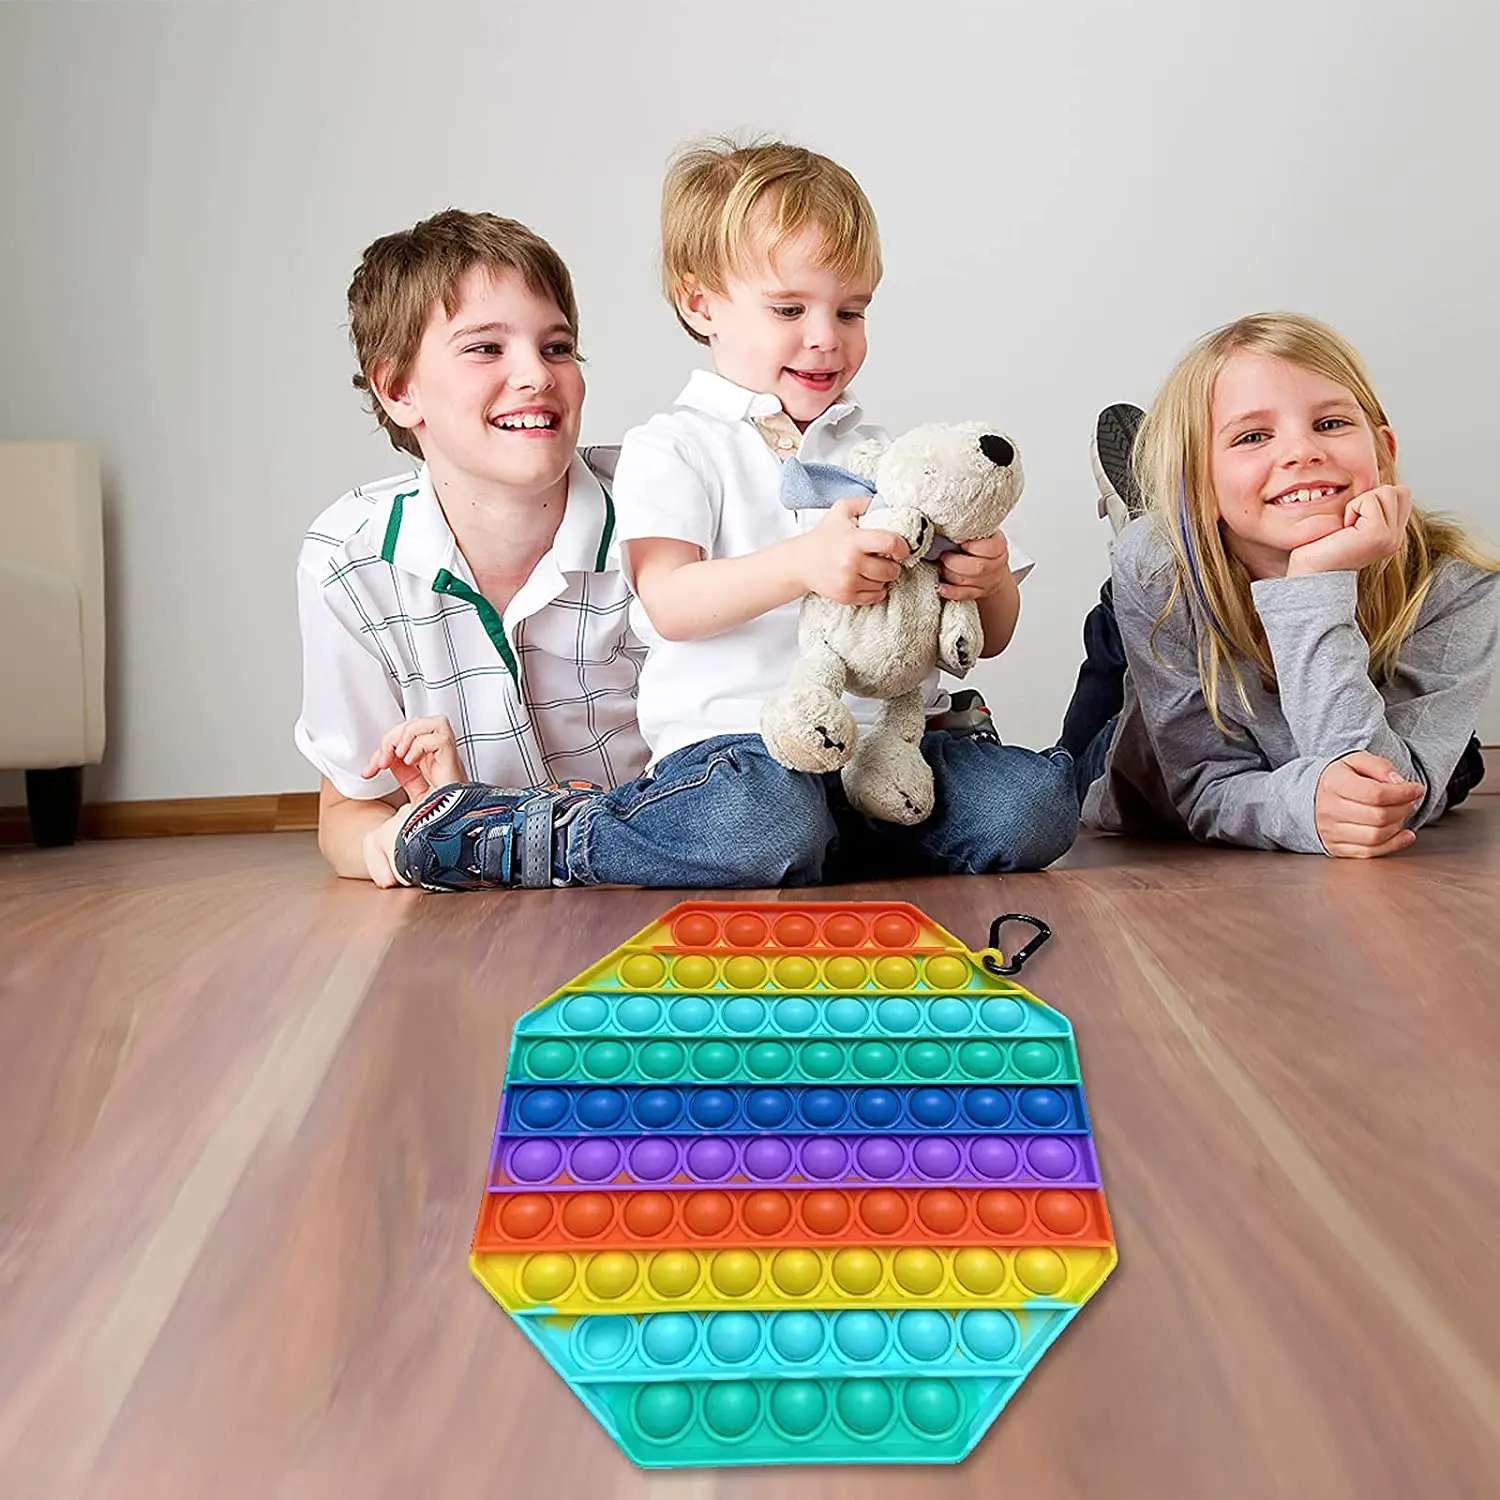 Big Size 20 cm Fidget Sensory Toys Silicone Pressure Relieving Toys Squeeze Toys for Kids Children Adult Rainbow 82 Bubbles